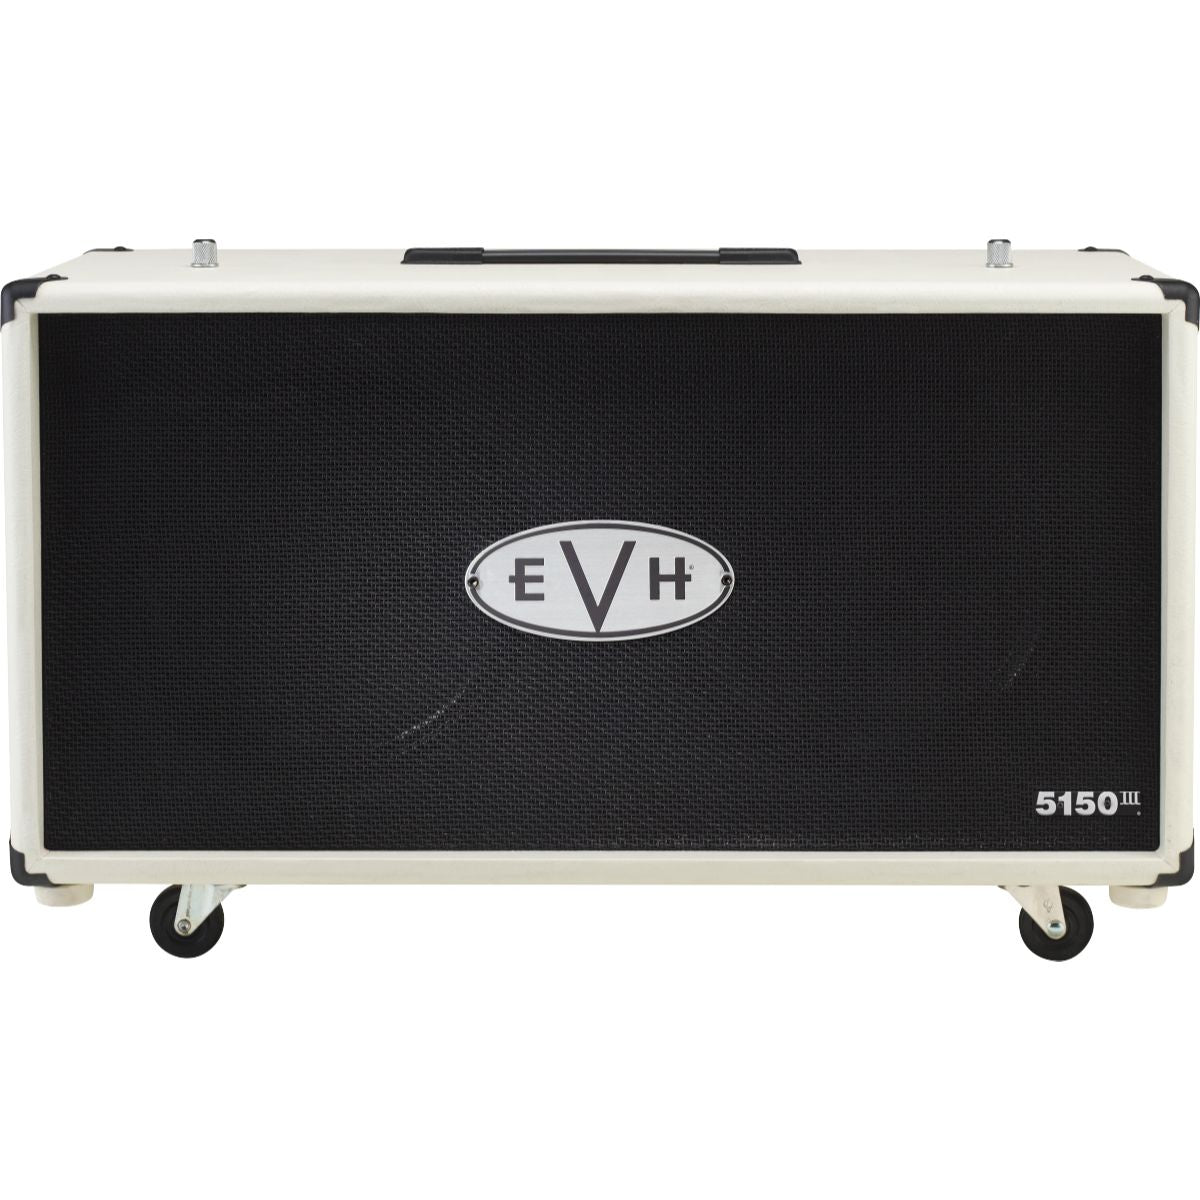 EVH 5150 III 2x12 Cabinet Ivory